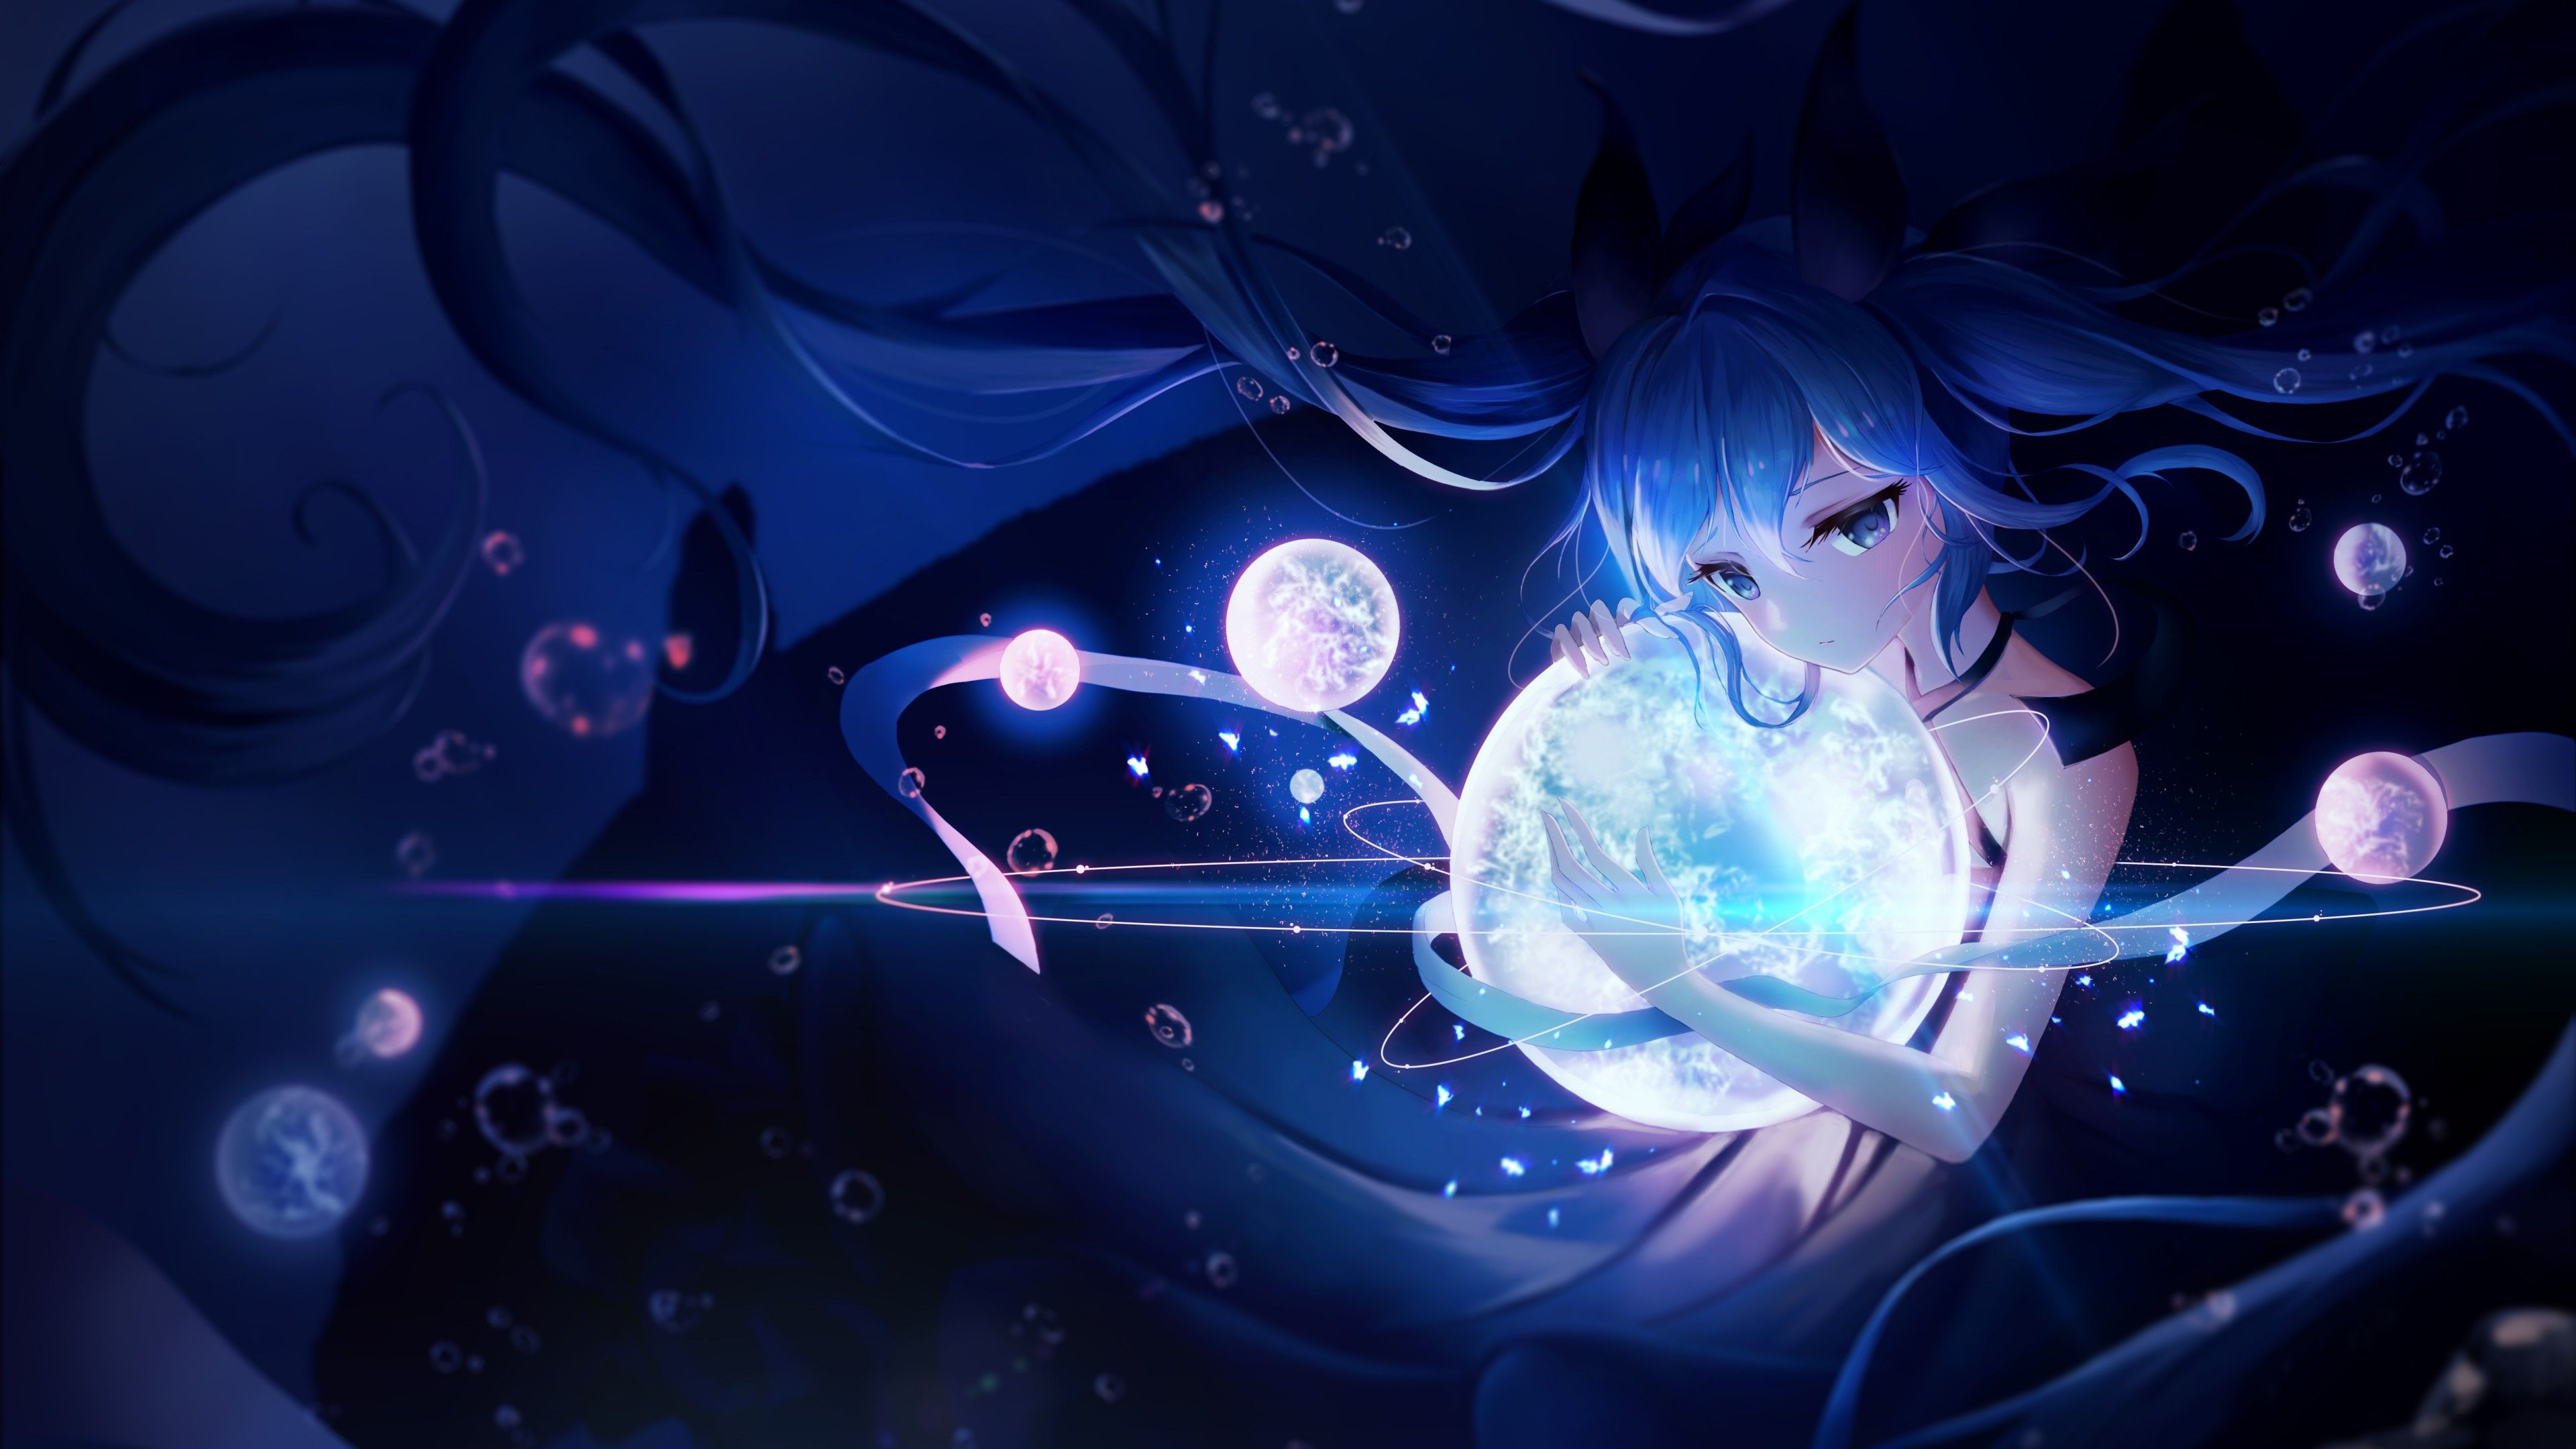 Hatsune Miku 4K Wallpaper, Anime girl, Dream, Cosmos, Universe, Magic, 5K, Fantasy